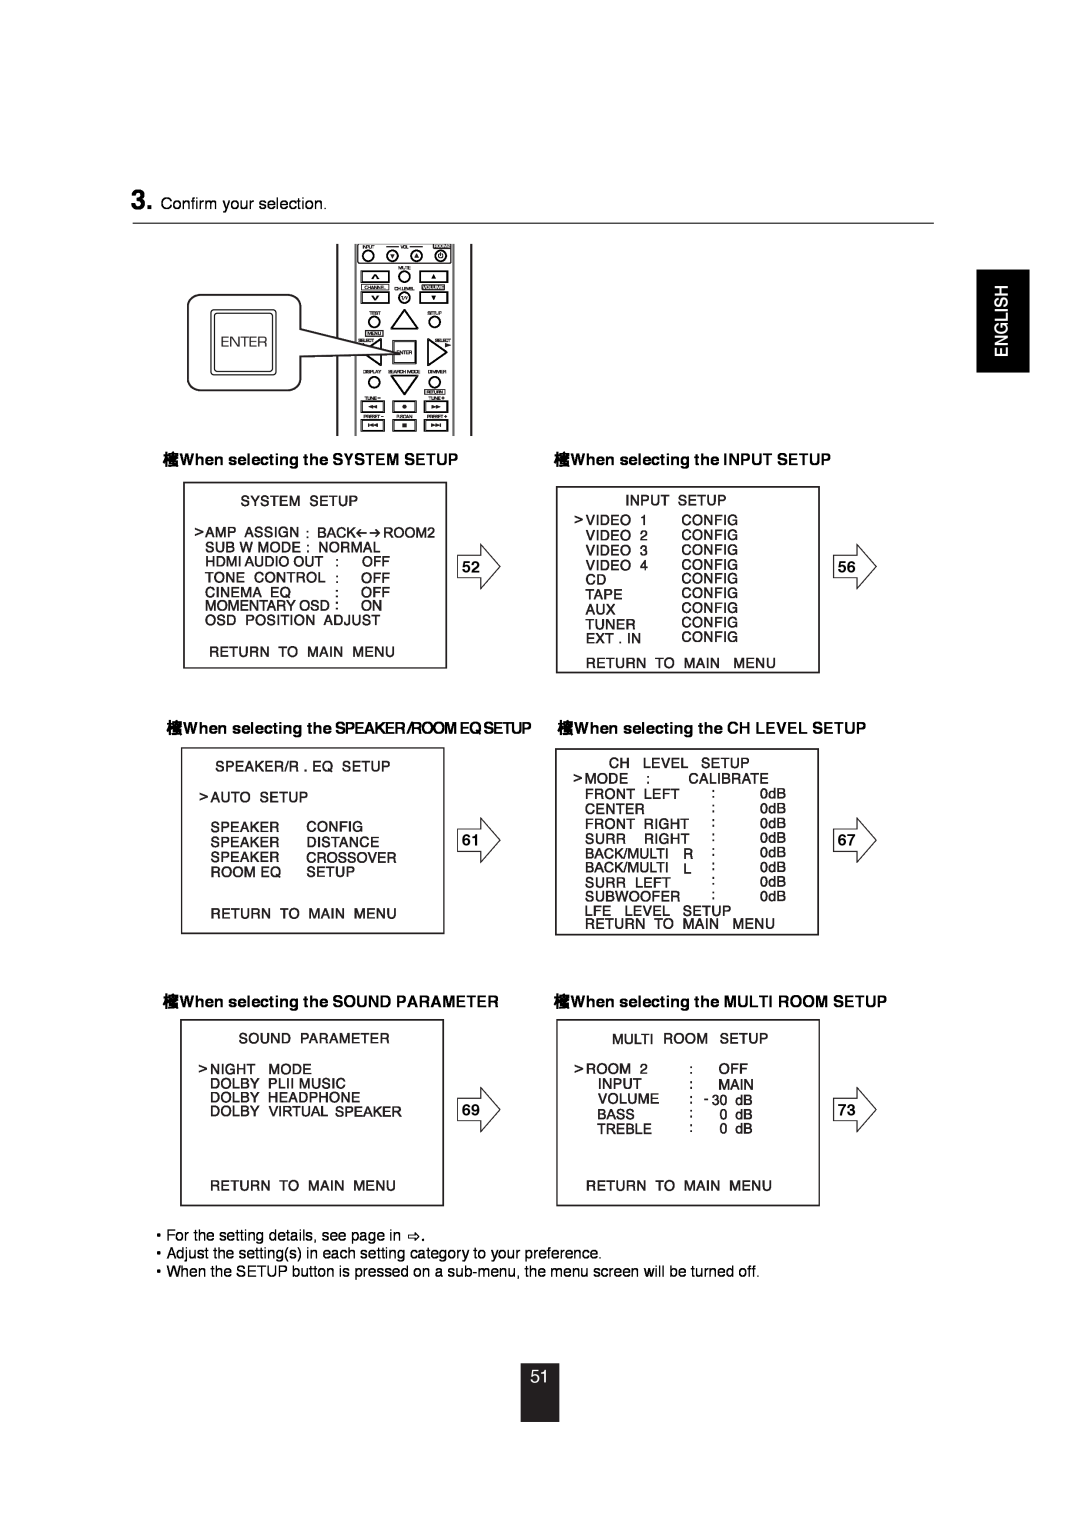 Sherwood R-872 manual Confirm your selection, When selecting the SYSTEM SETUP, When selecting the INPUT SETUP, English 